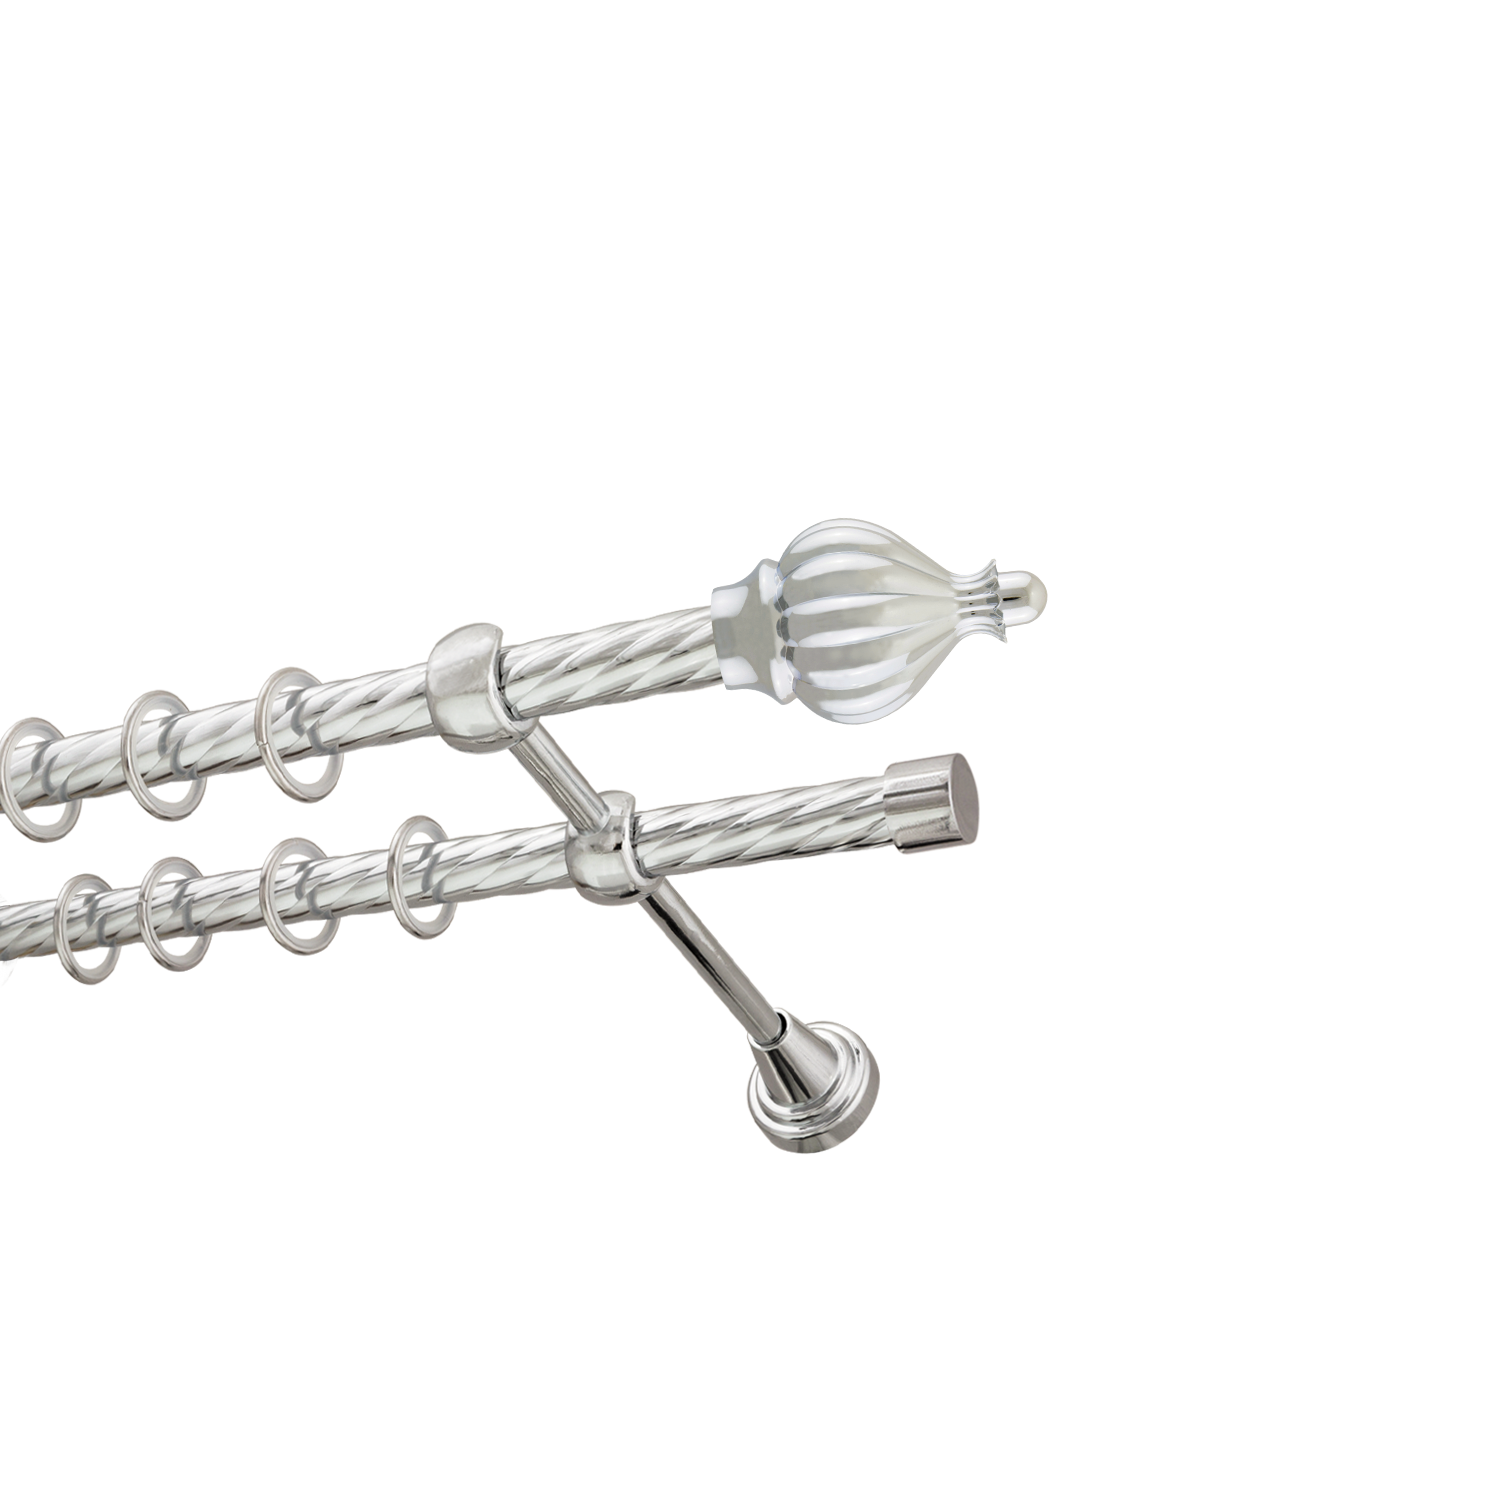 Металлический карниз для штор Афродита, двухрядный 16/16 мм, серебро, витая штанга, длина 240 см - фото Wikidecor.ru